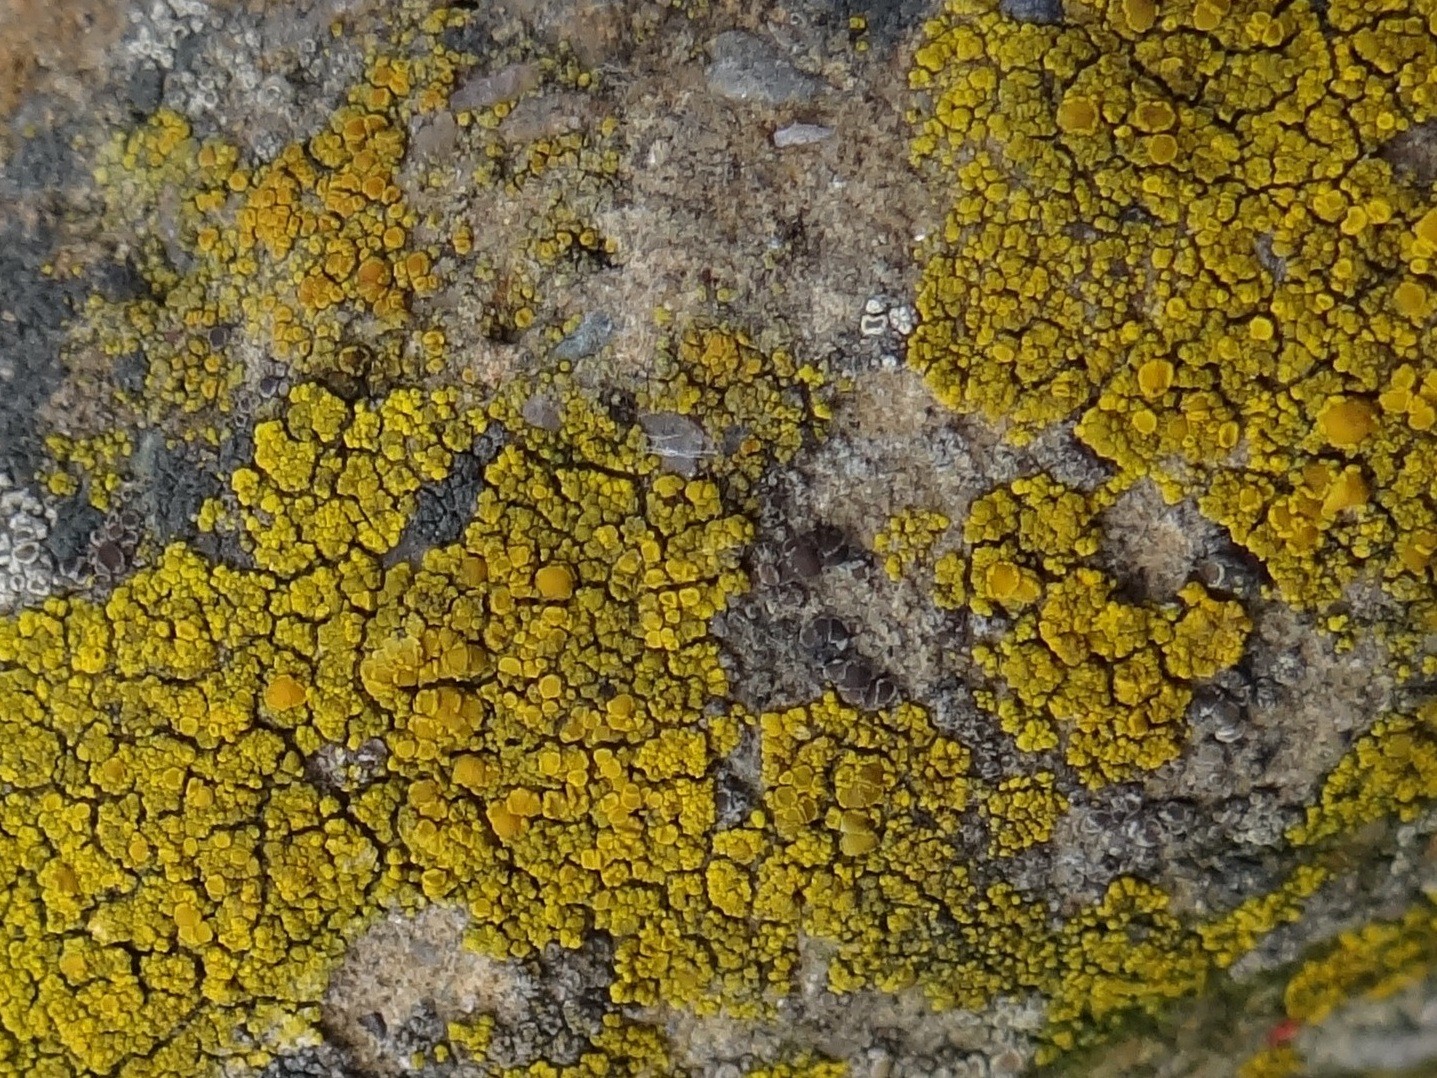 Common goldspeck (Candelariella vitellina)